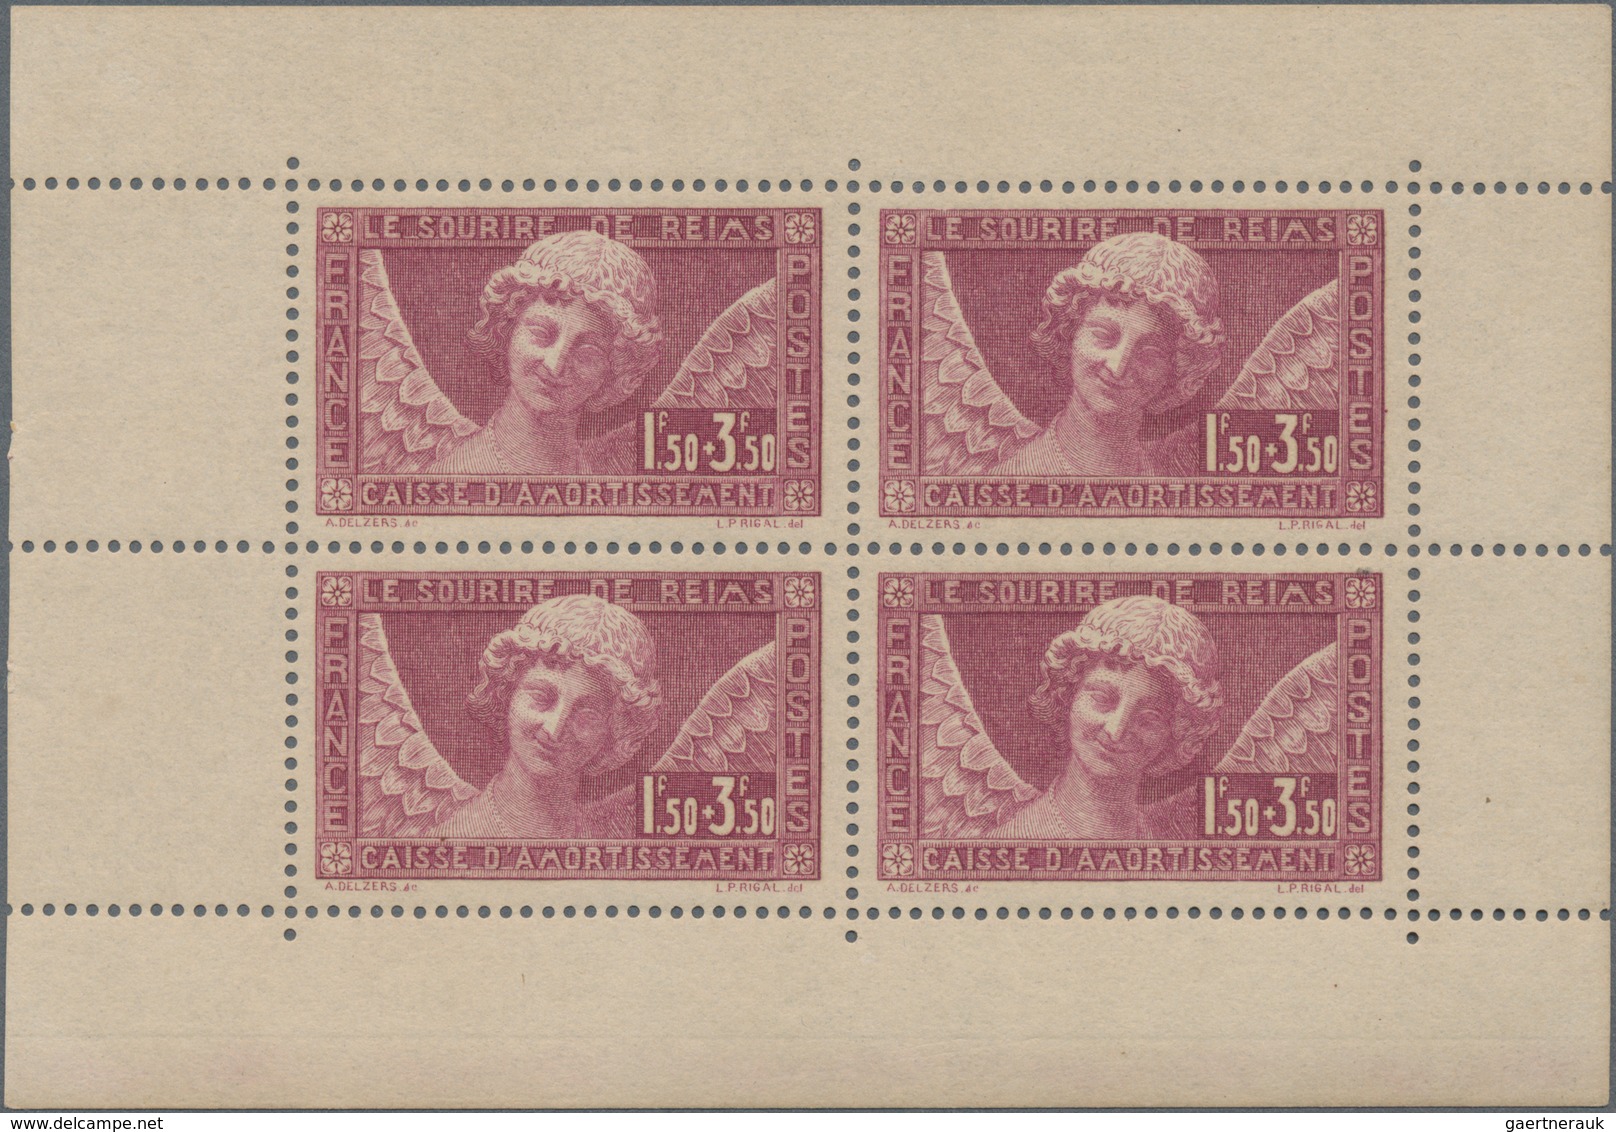 Frankreich - Markenheftchen: 1925/1926, Semeuse camee/lignee, lot of five booklets: Maury nos. 49, 5